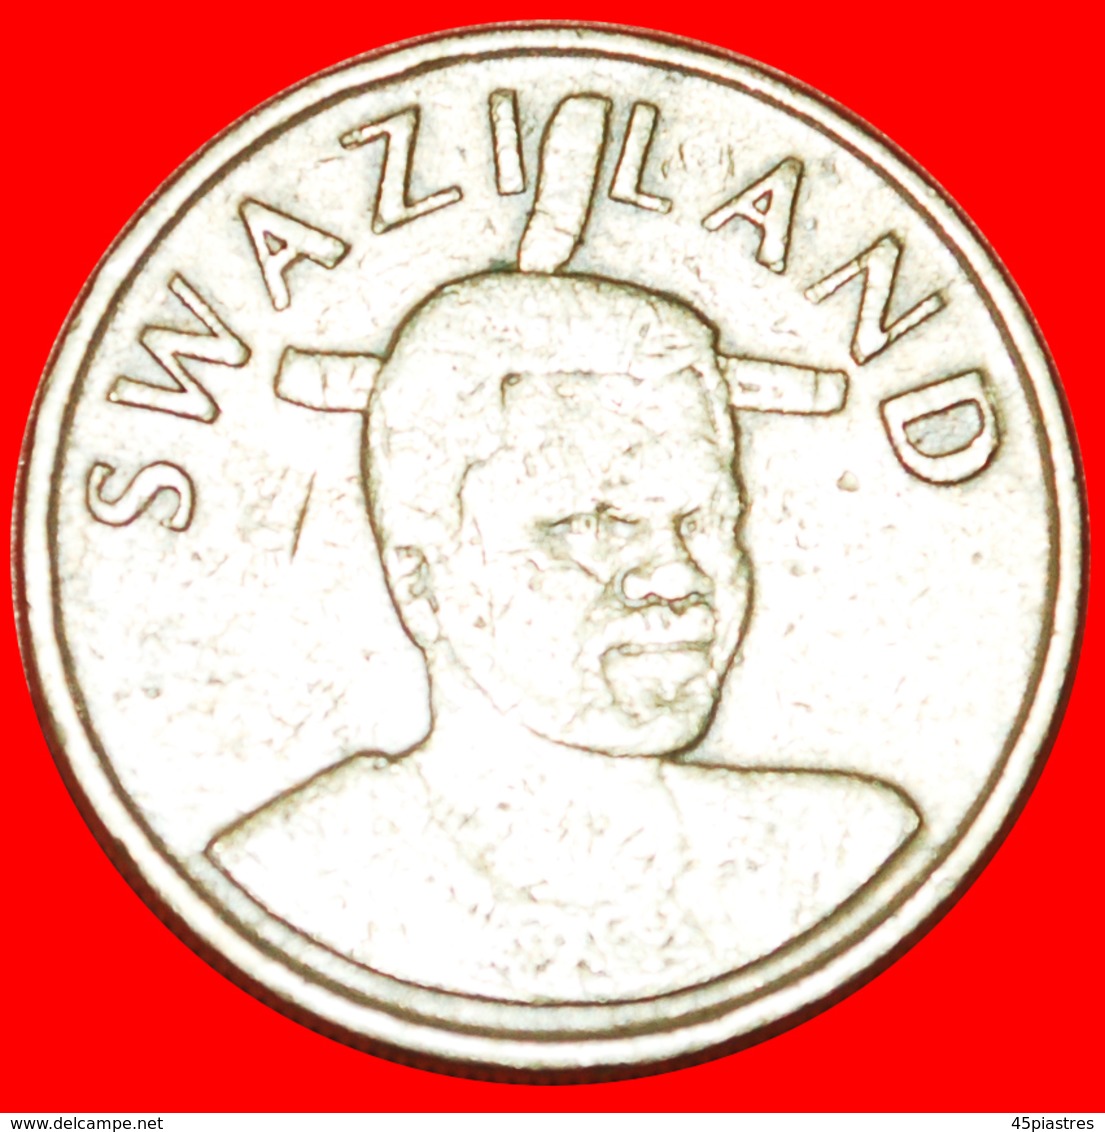 # 2 PORTRAITS (1995-2009): SWAZILAND ★ 1 LANGENI 2003! LOW START ★ NO RESERVE! - Swaziland